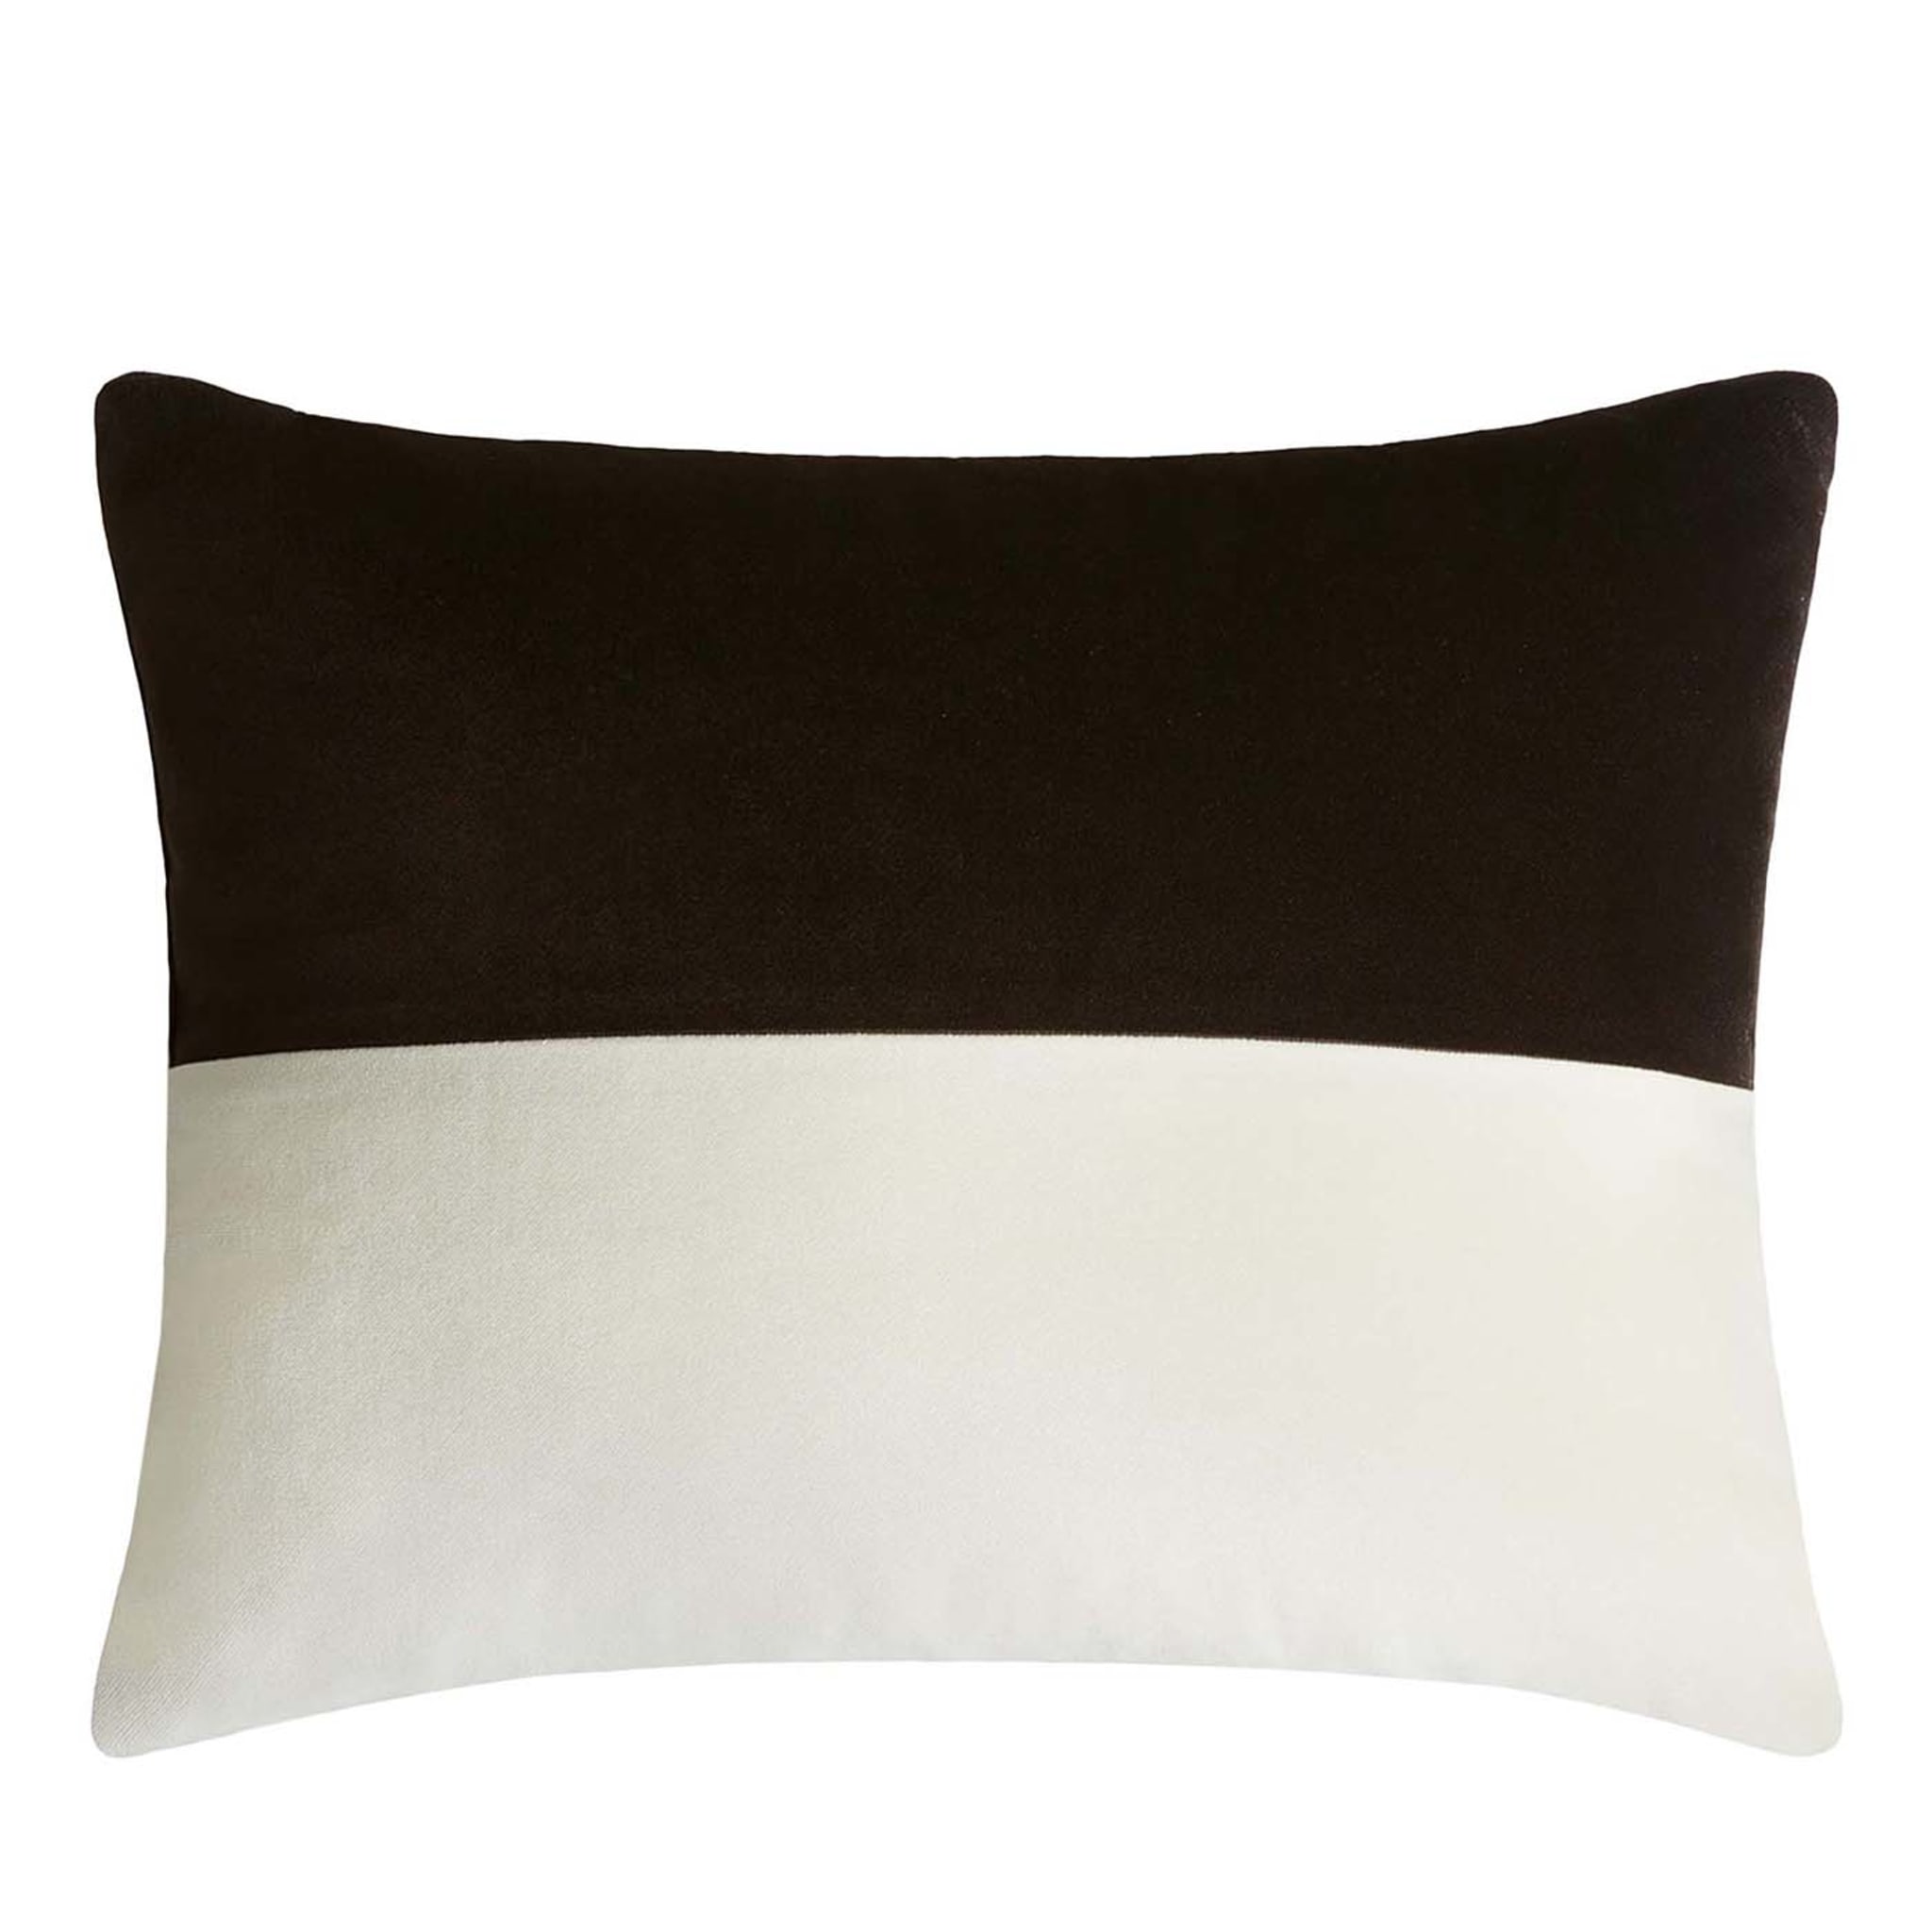 DOUBLE HORIZONTAL Velvet black and white cushion - Main view